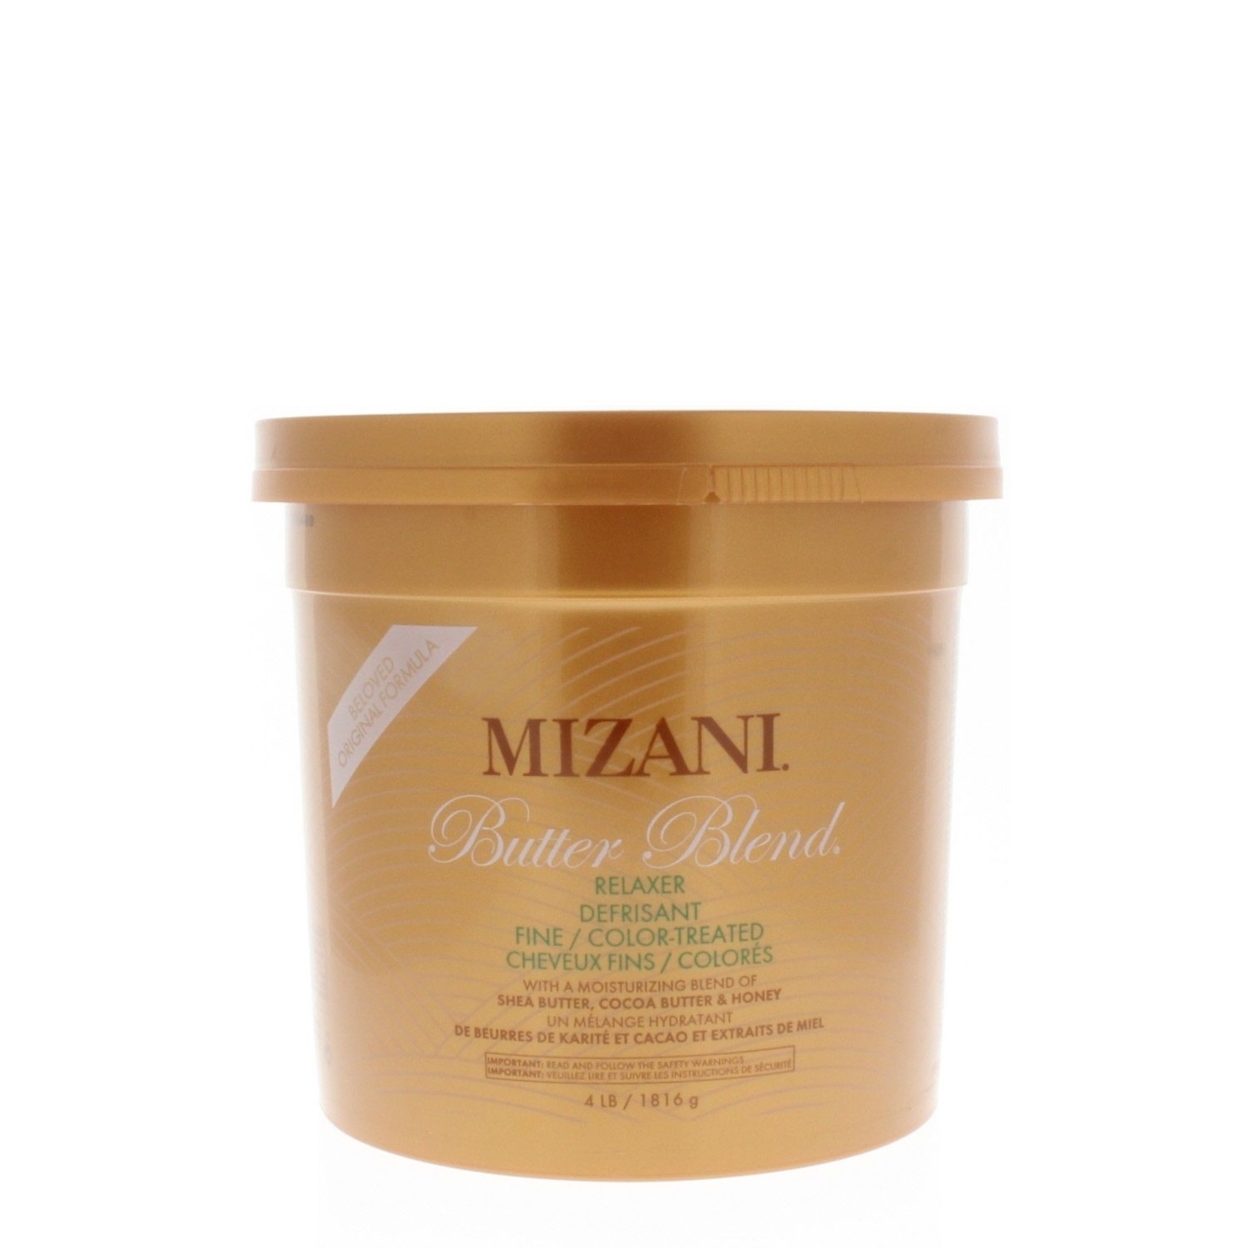 Mizani Butter Blend Rhelaxer For Fine/Color Treated Hair Relaxer 4lbs/1816g